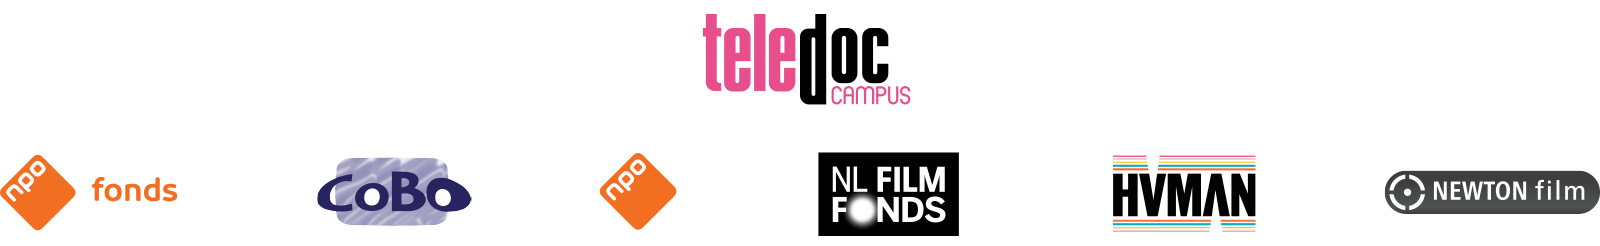 Teledoc-Campus-CoBo-NPO-Filmfonds-logos-2024-human